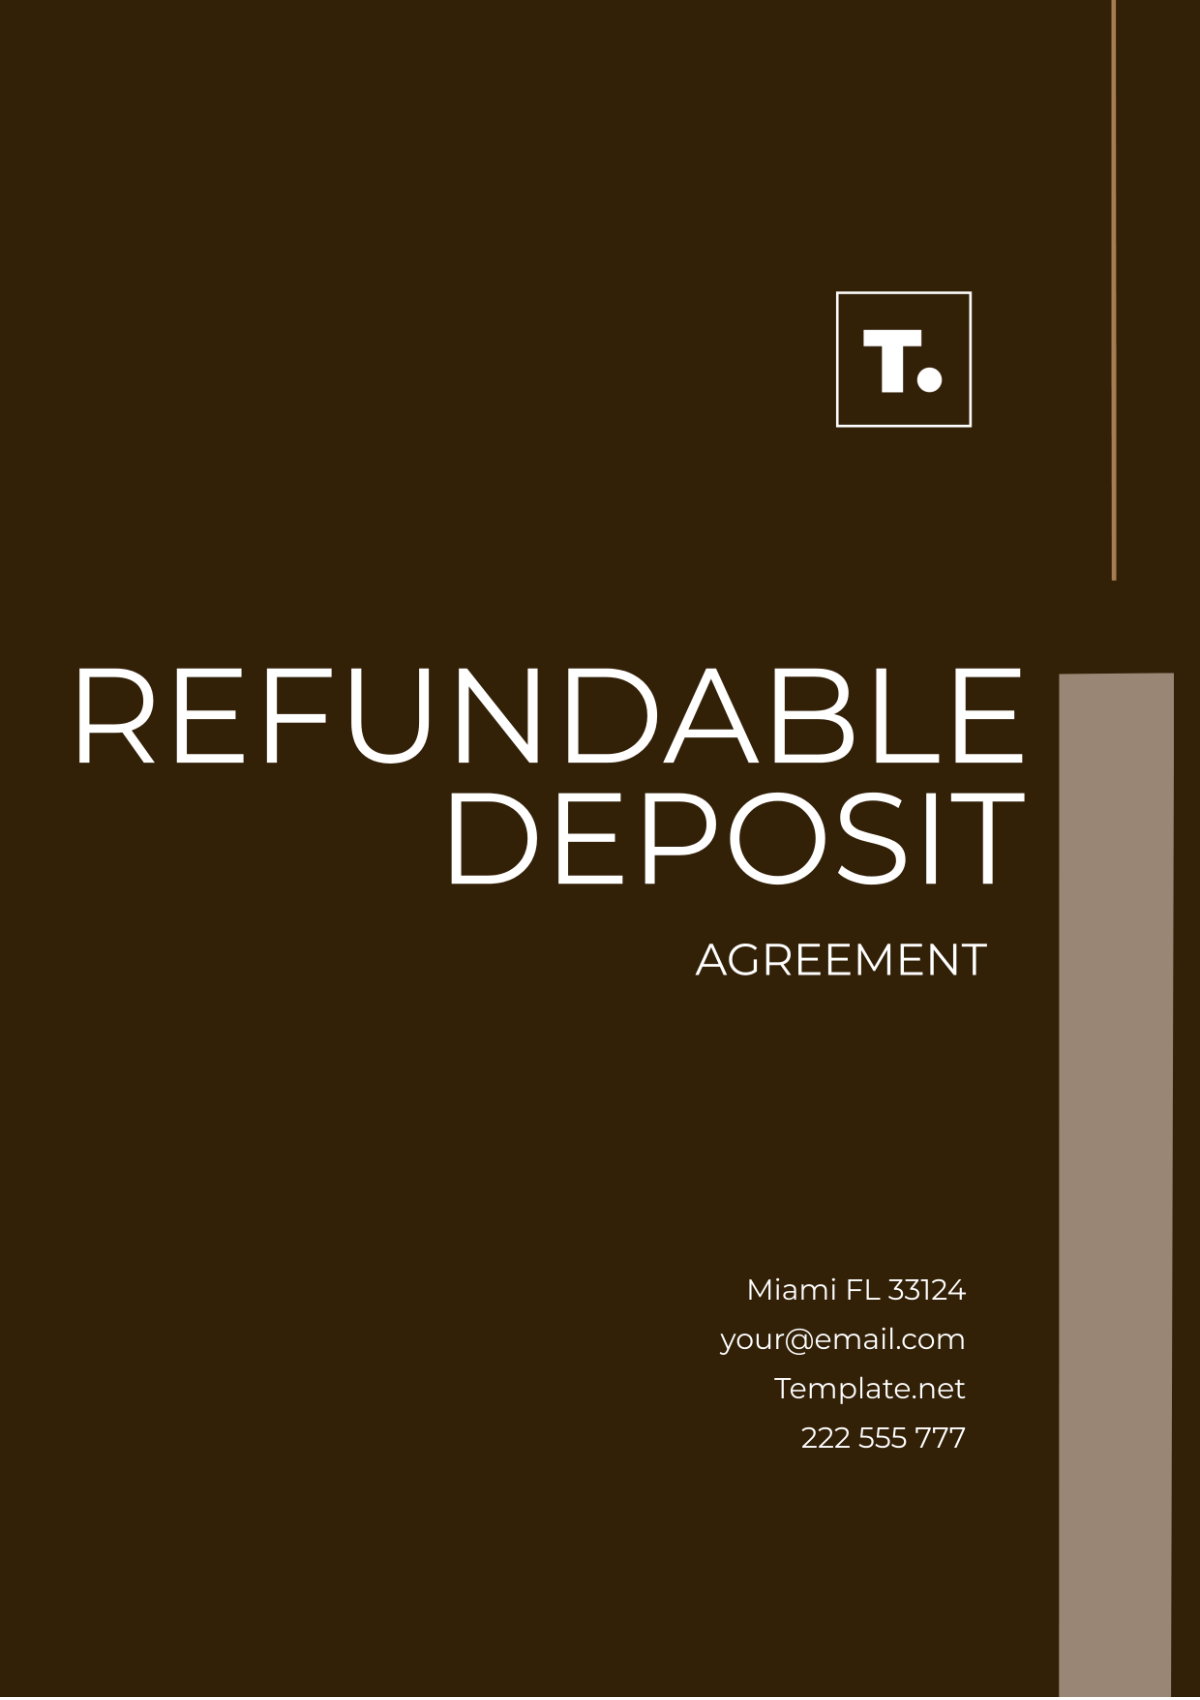 Refundable Deposit Agreement Template